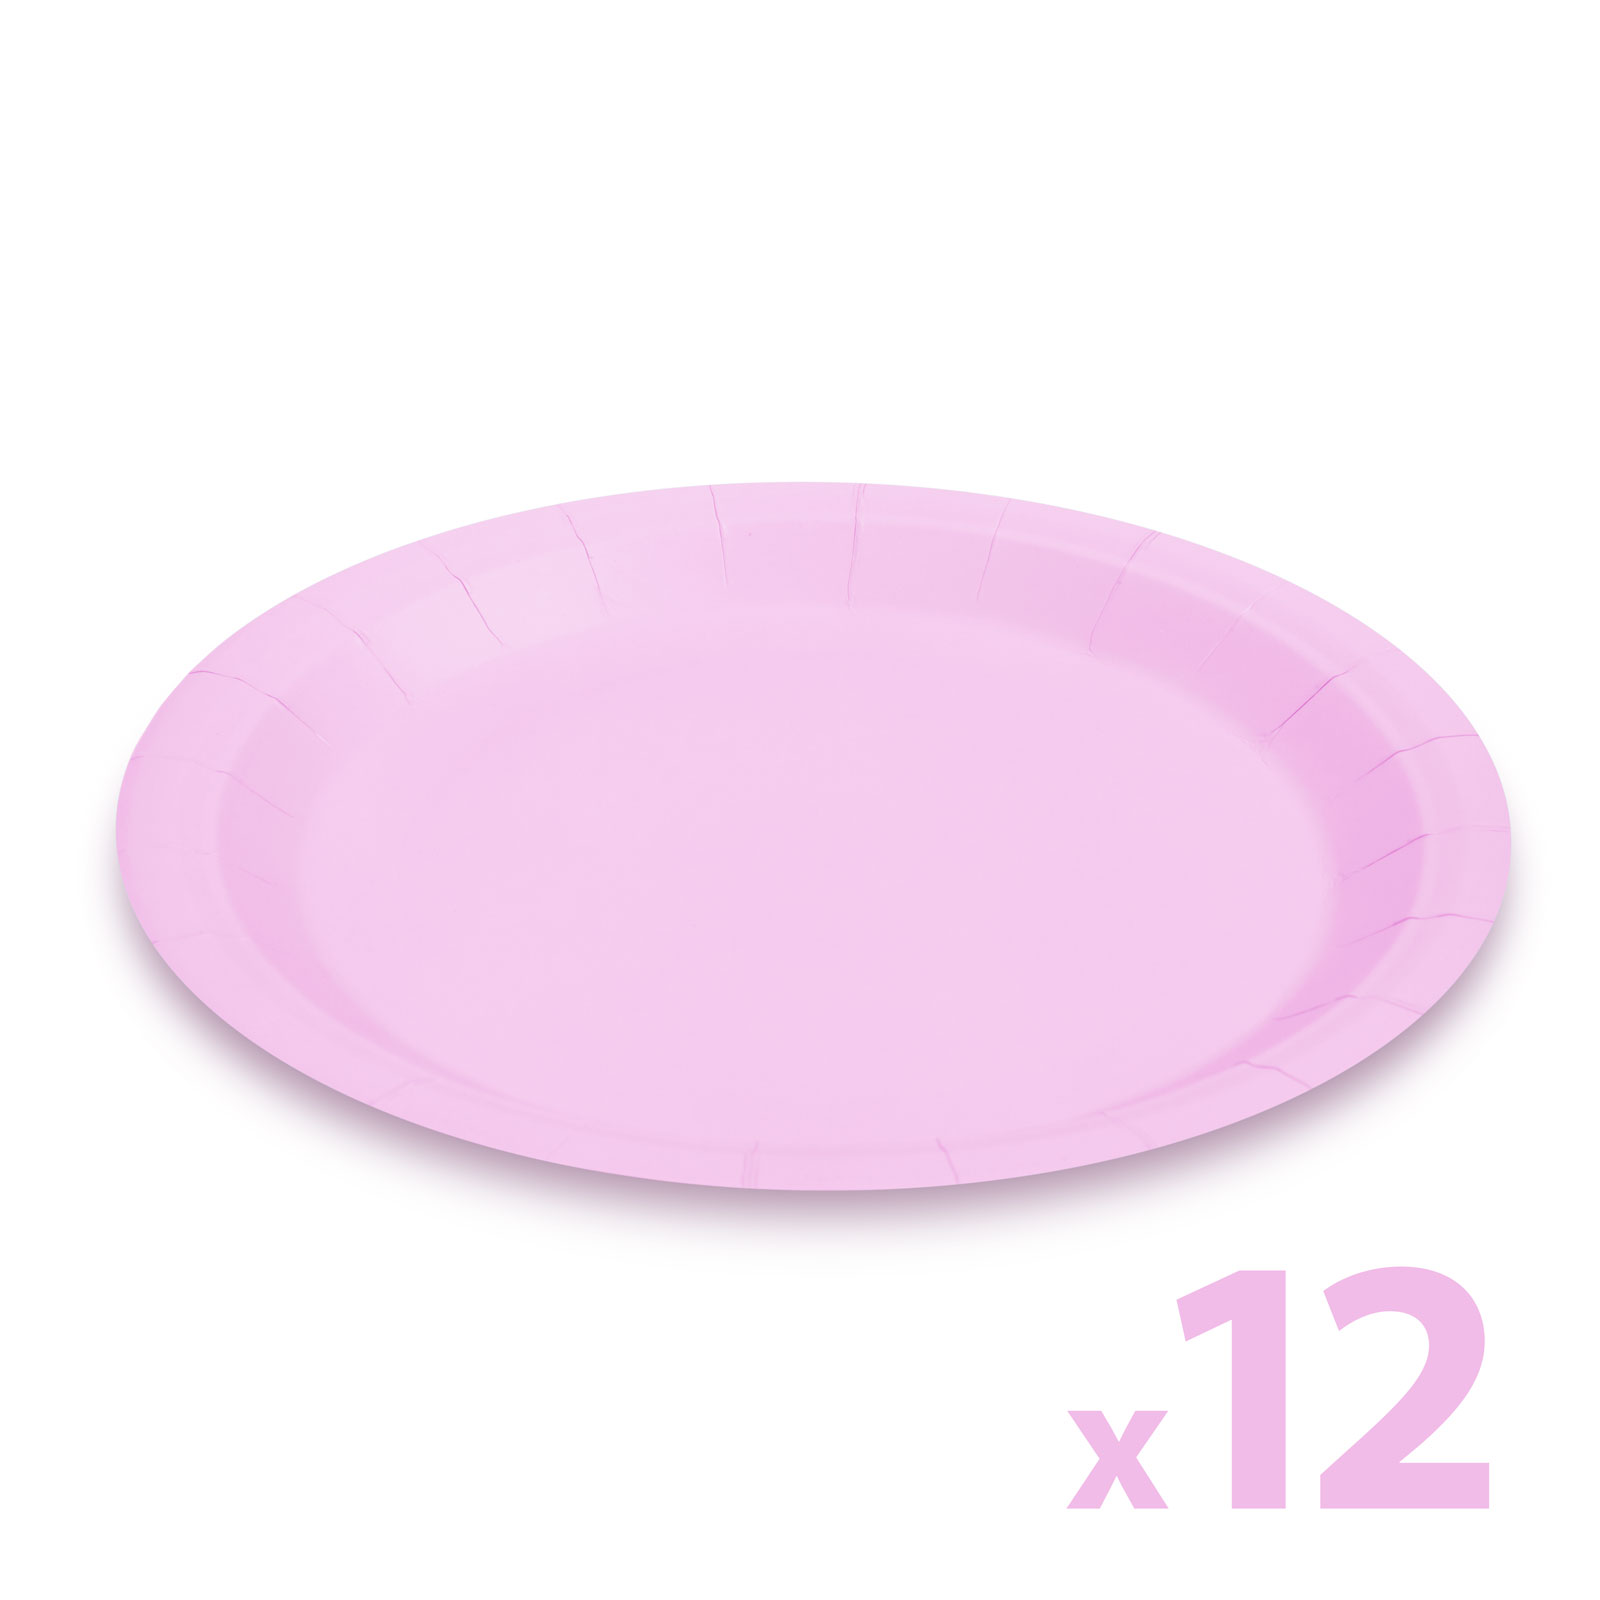 definitief Verwoesting Einde Kartonnen Bordjes Roze 23cm 12 stuks - Wegwerp borden -  Feest/Verjaardag/BBQ borden / Gebak Bordjes - Feestjes - Babyshower -  HomeShopXL